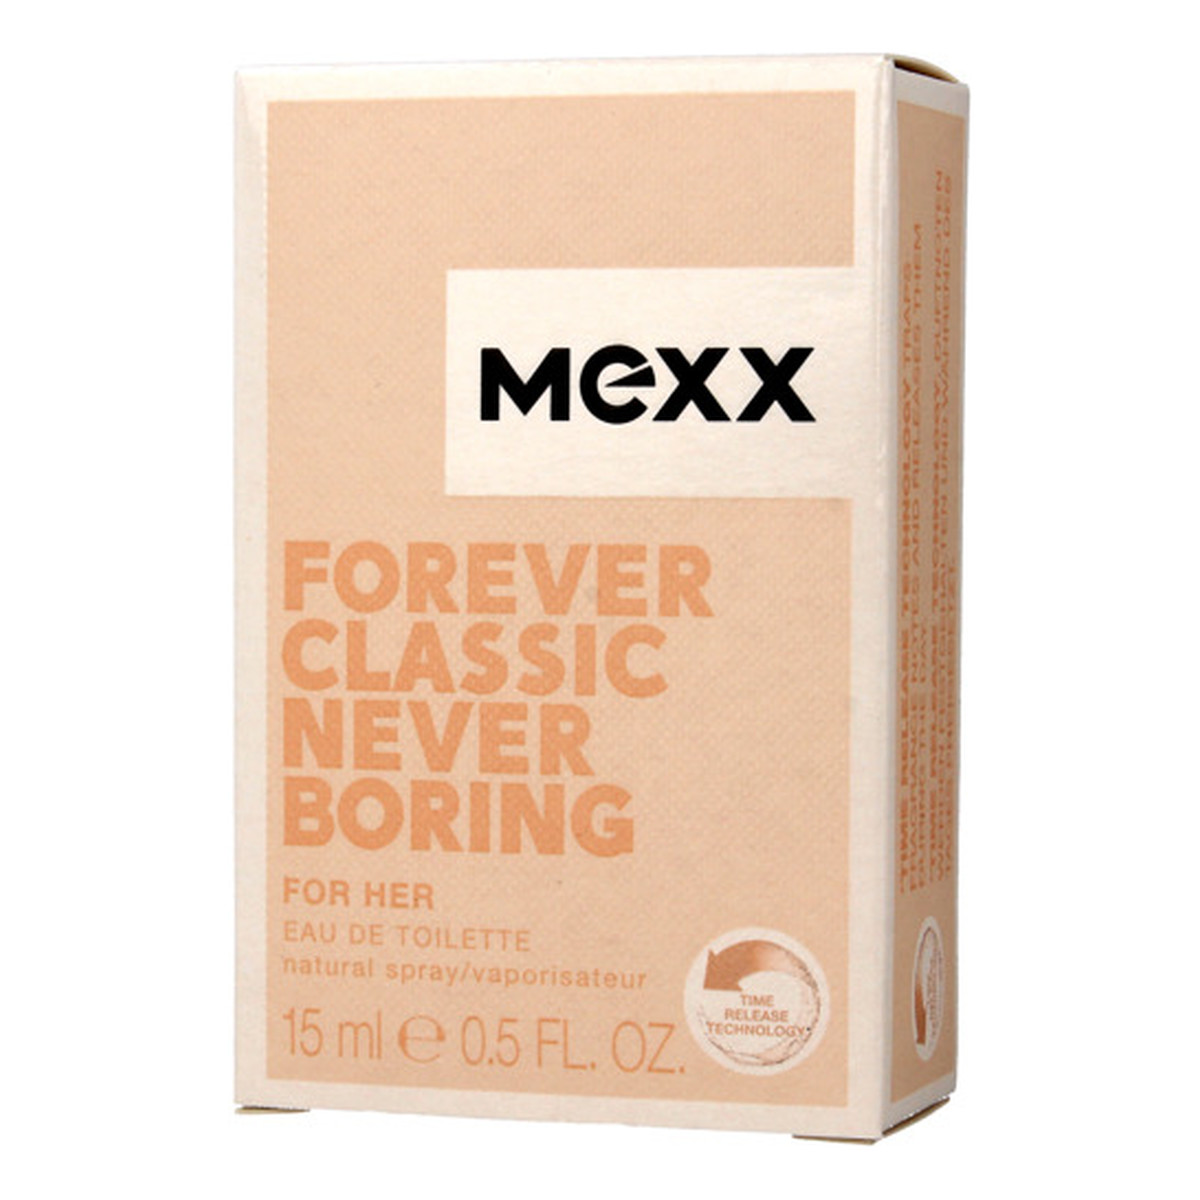 Mexx Forever Classic Never Boring for Her Woda toaletowa 15ml